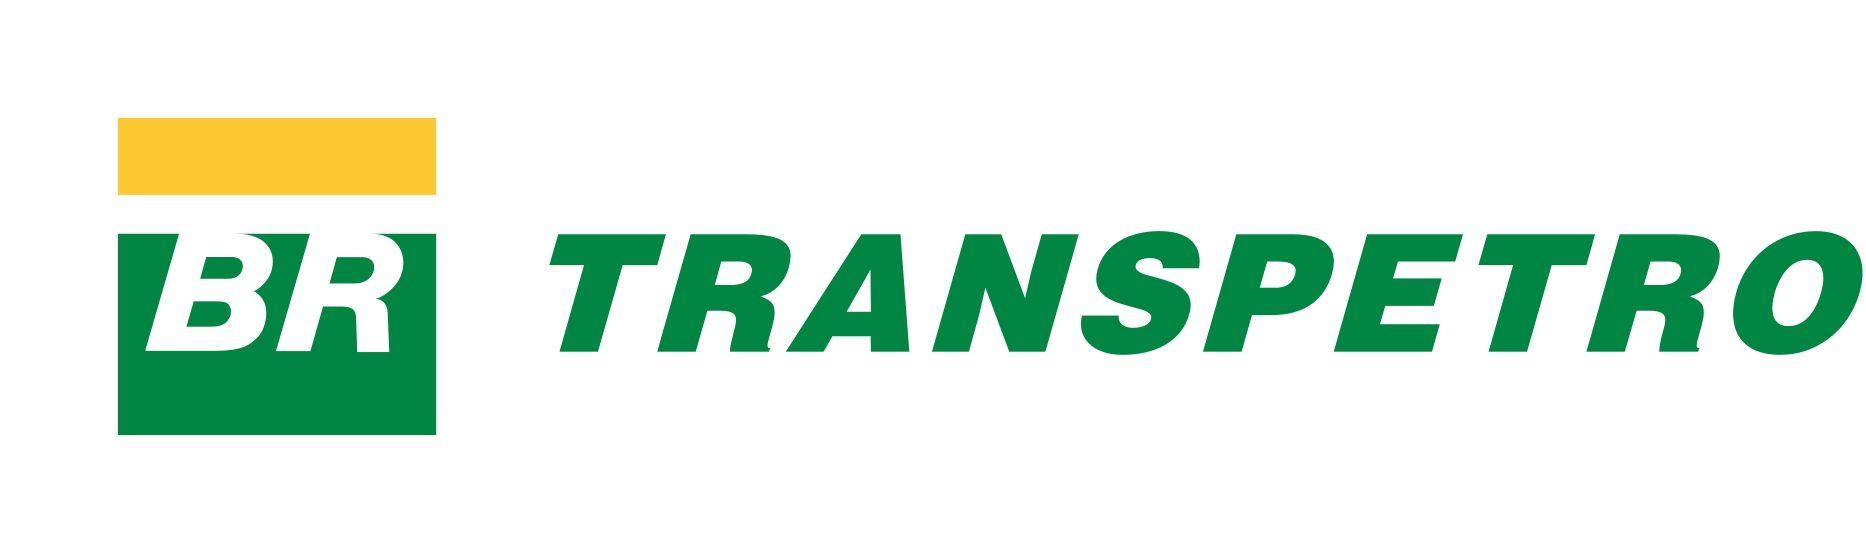 Green BR Logo - Transpetro